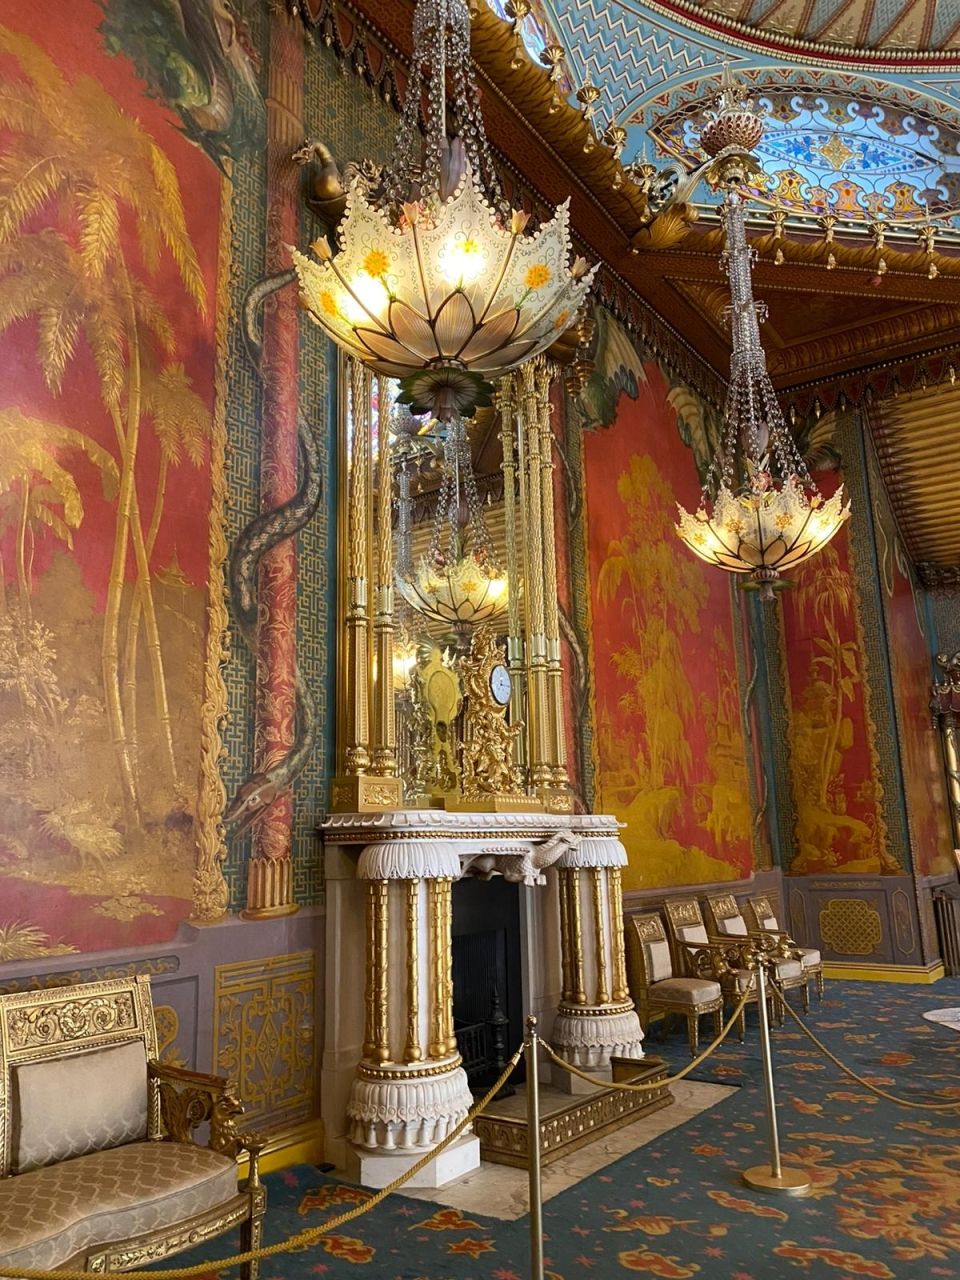 Inside the Royal Pavilion